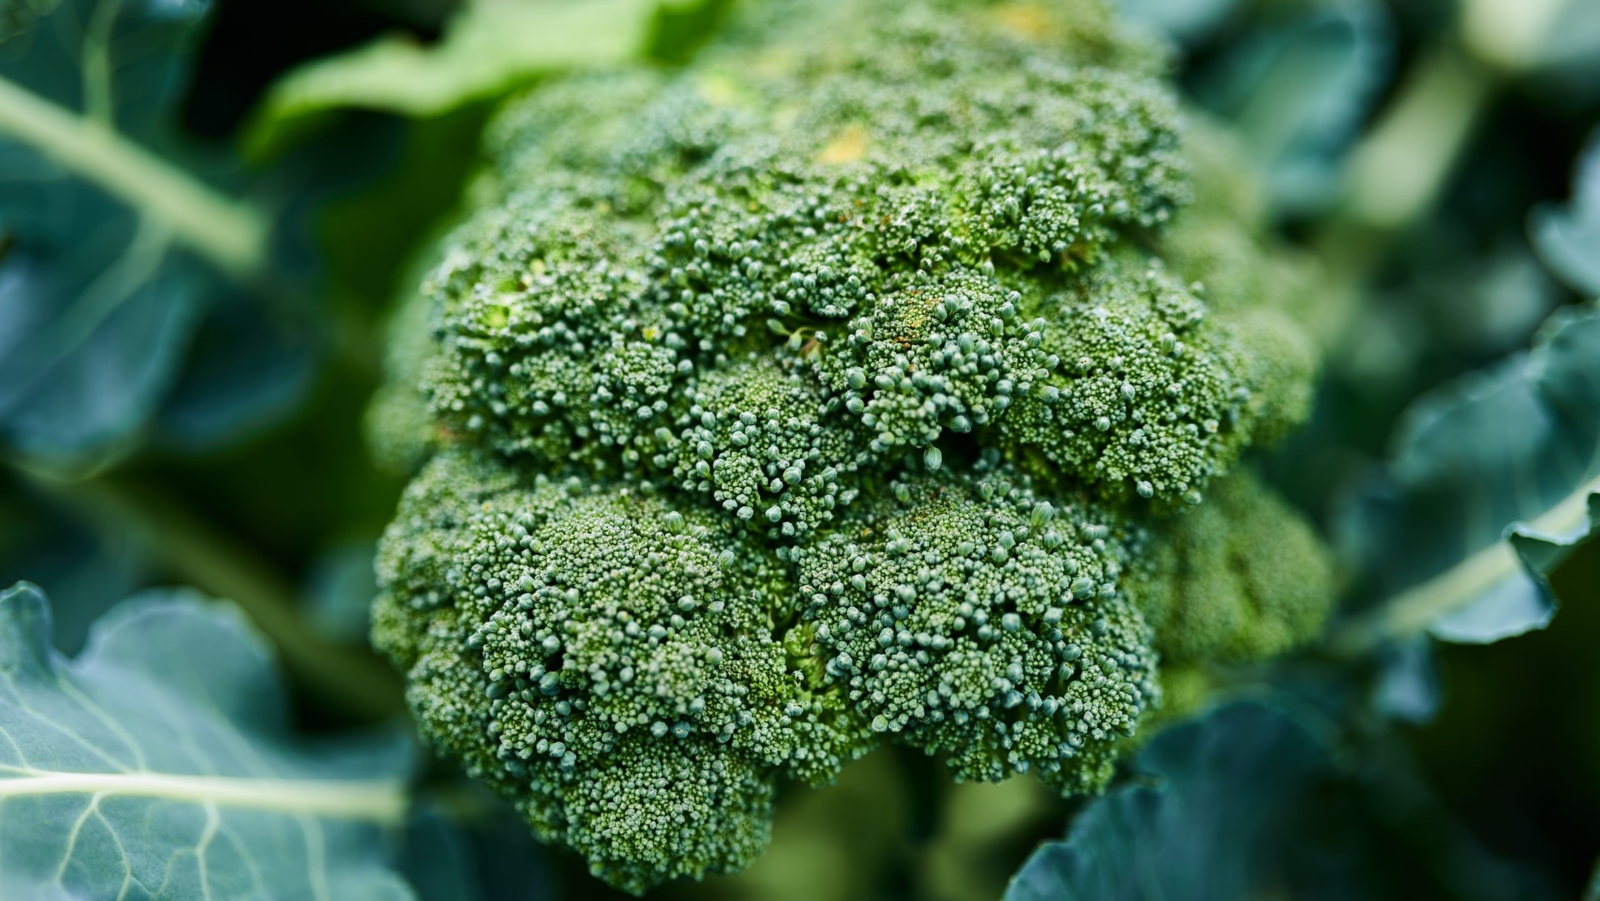 Photo of broccoli by Hans Ripa on Unsplash